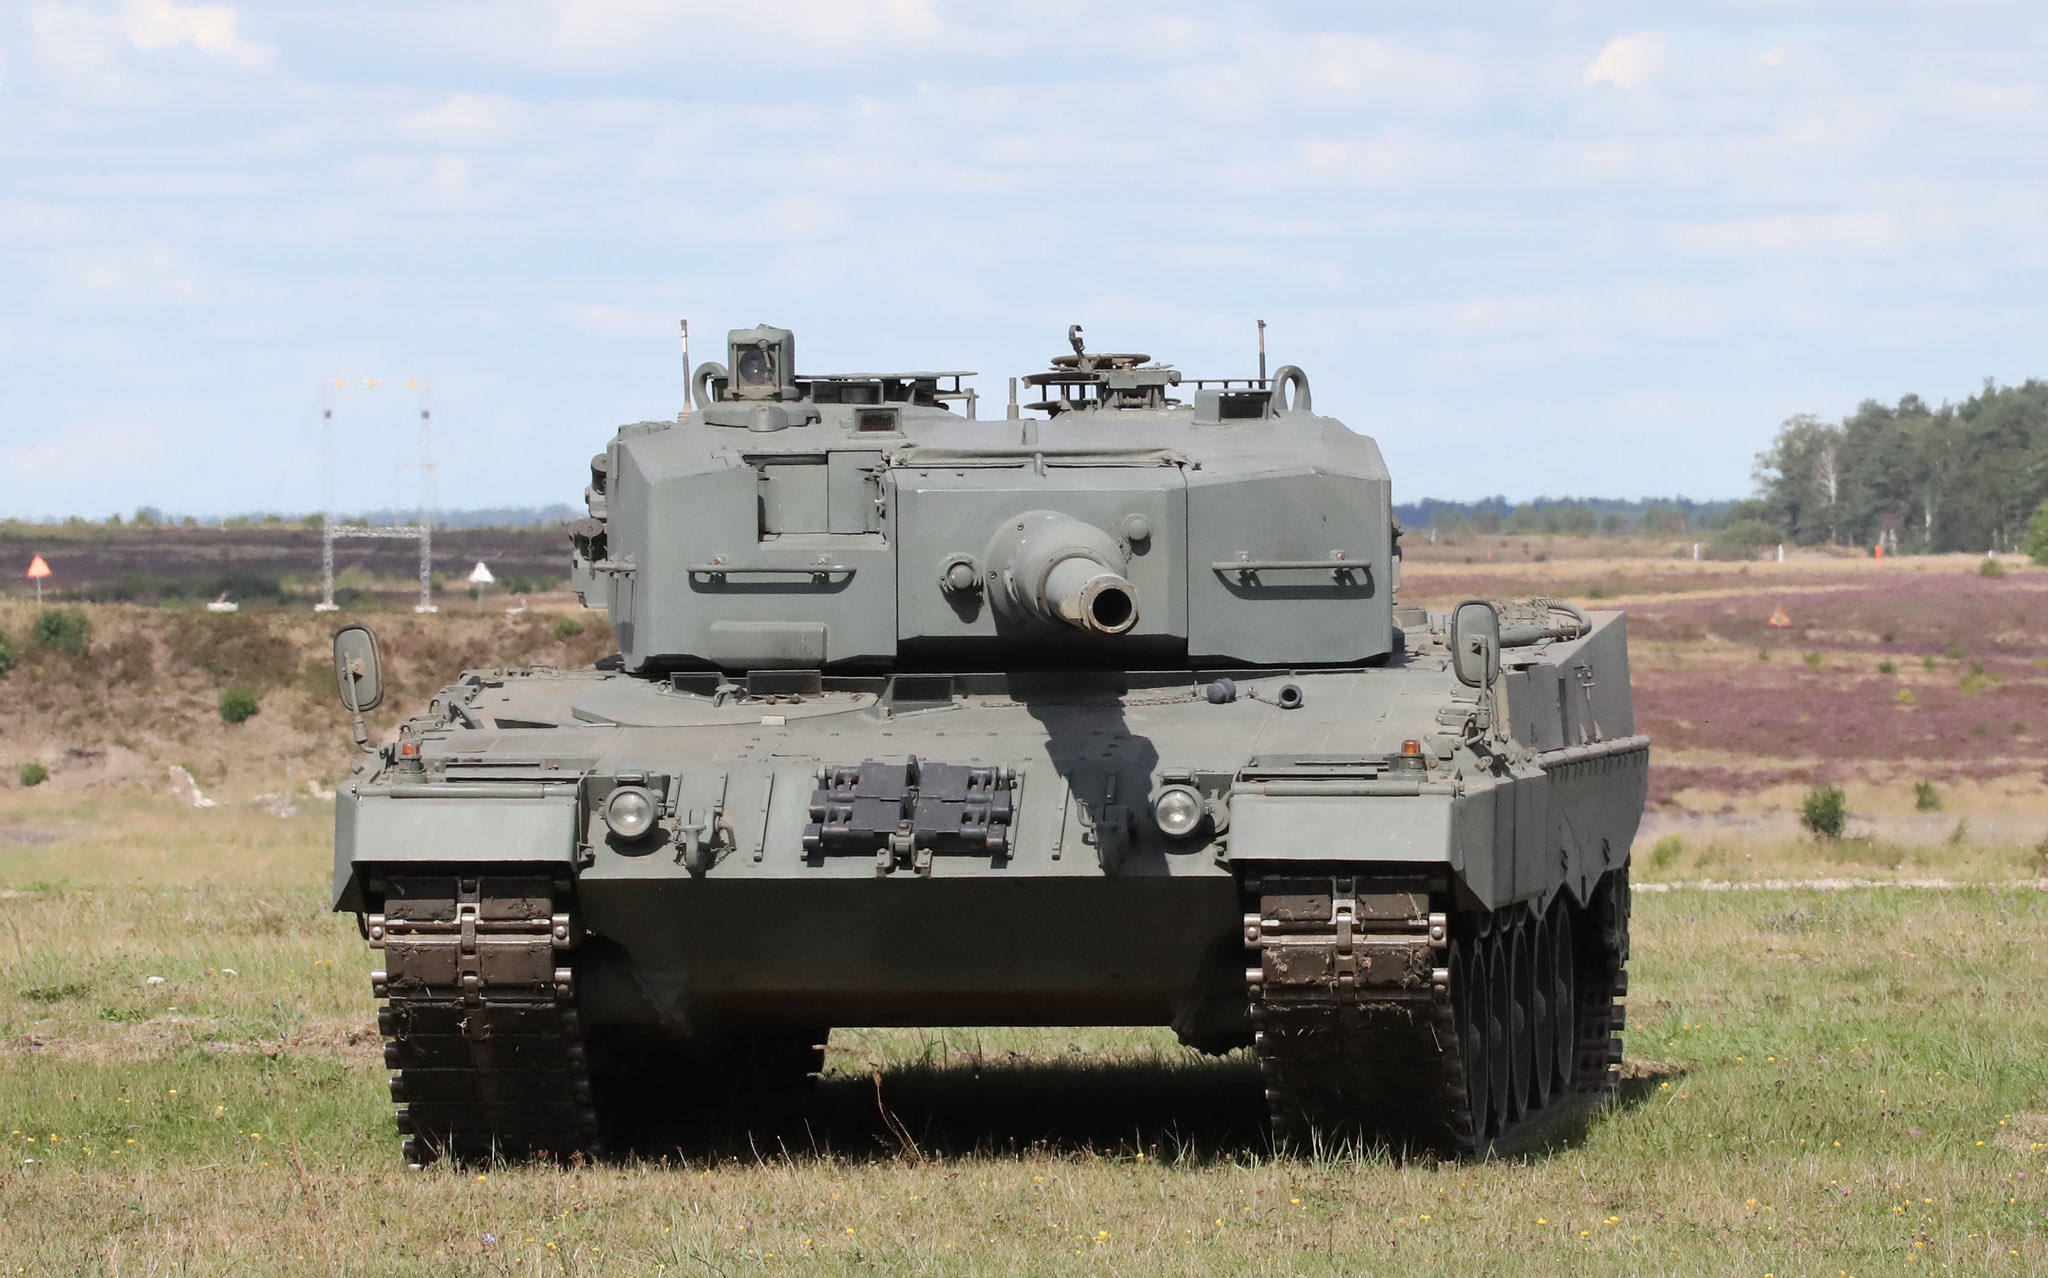 Leopard 2A4 main battle tank